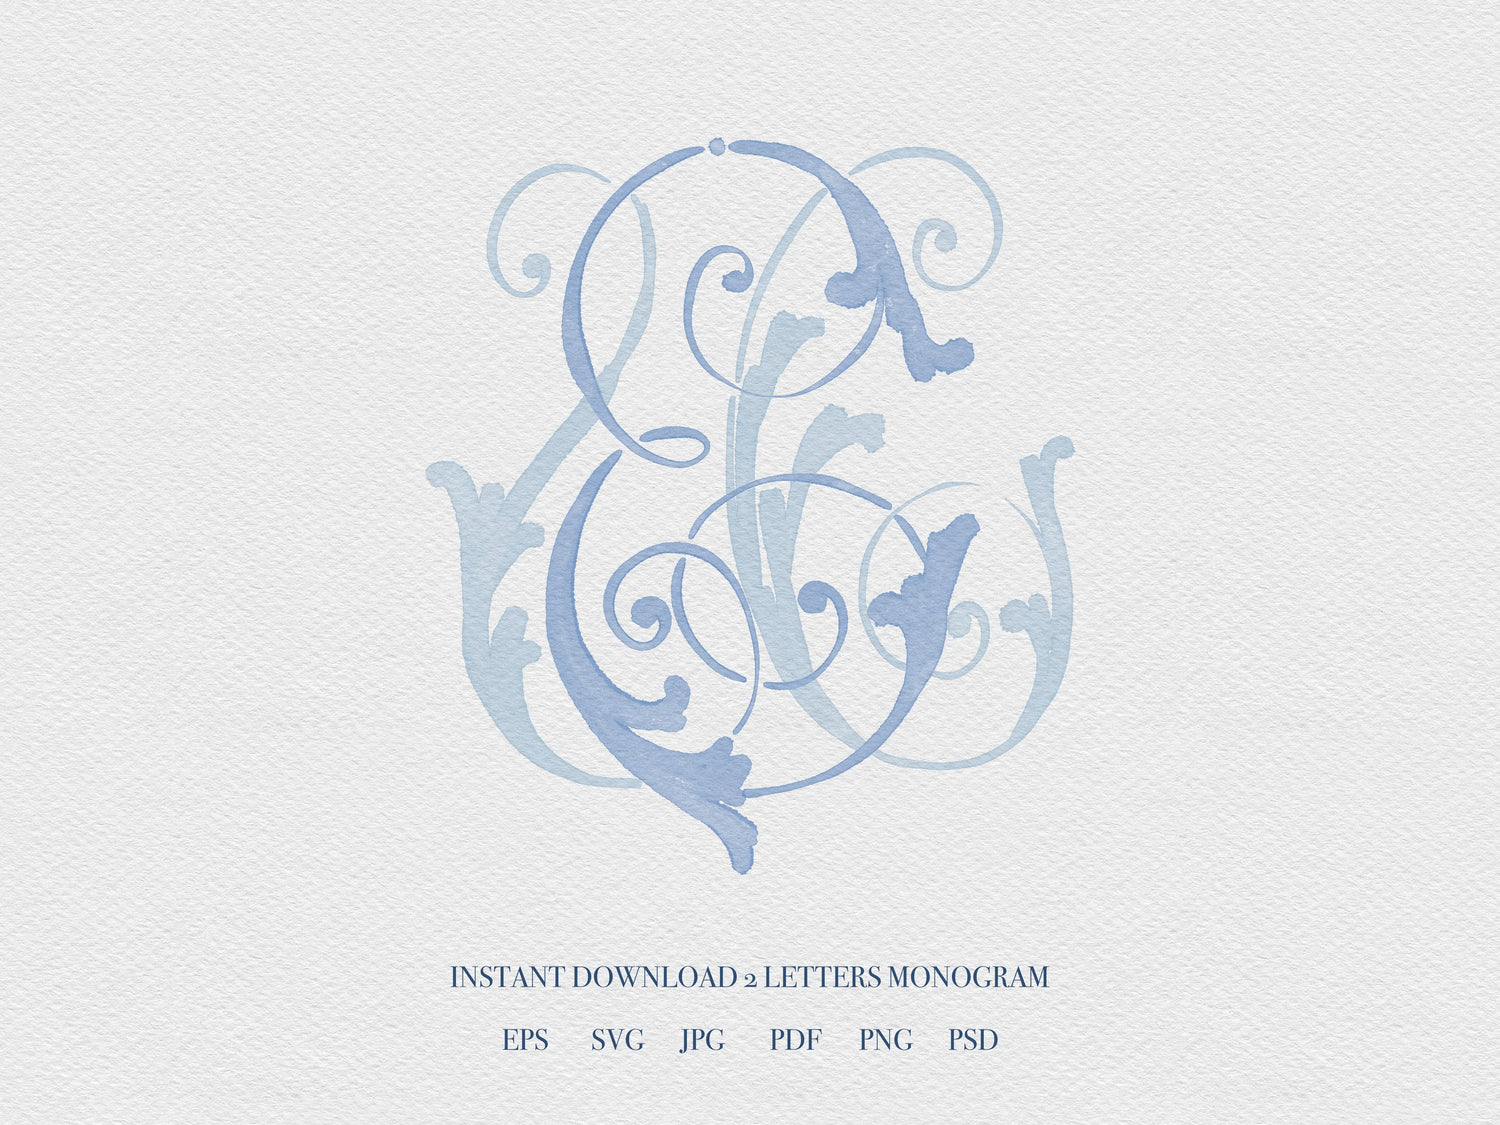 2 Letter Monogram with Letters EU | Digital Download - Wedding Monogram SVG, Personal Logo, Wedding Logo for Wedding Invitations The Wedding Crest Lab